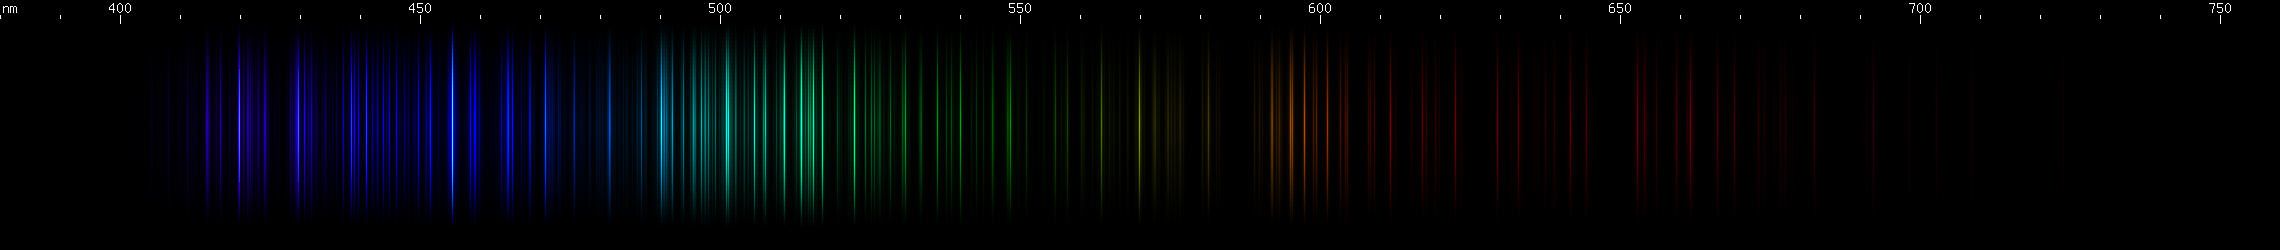 Spectral lines of Ruthenium.